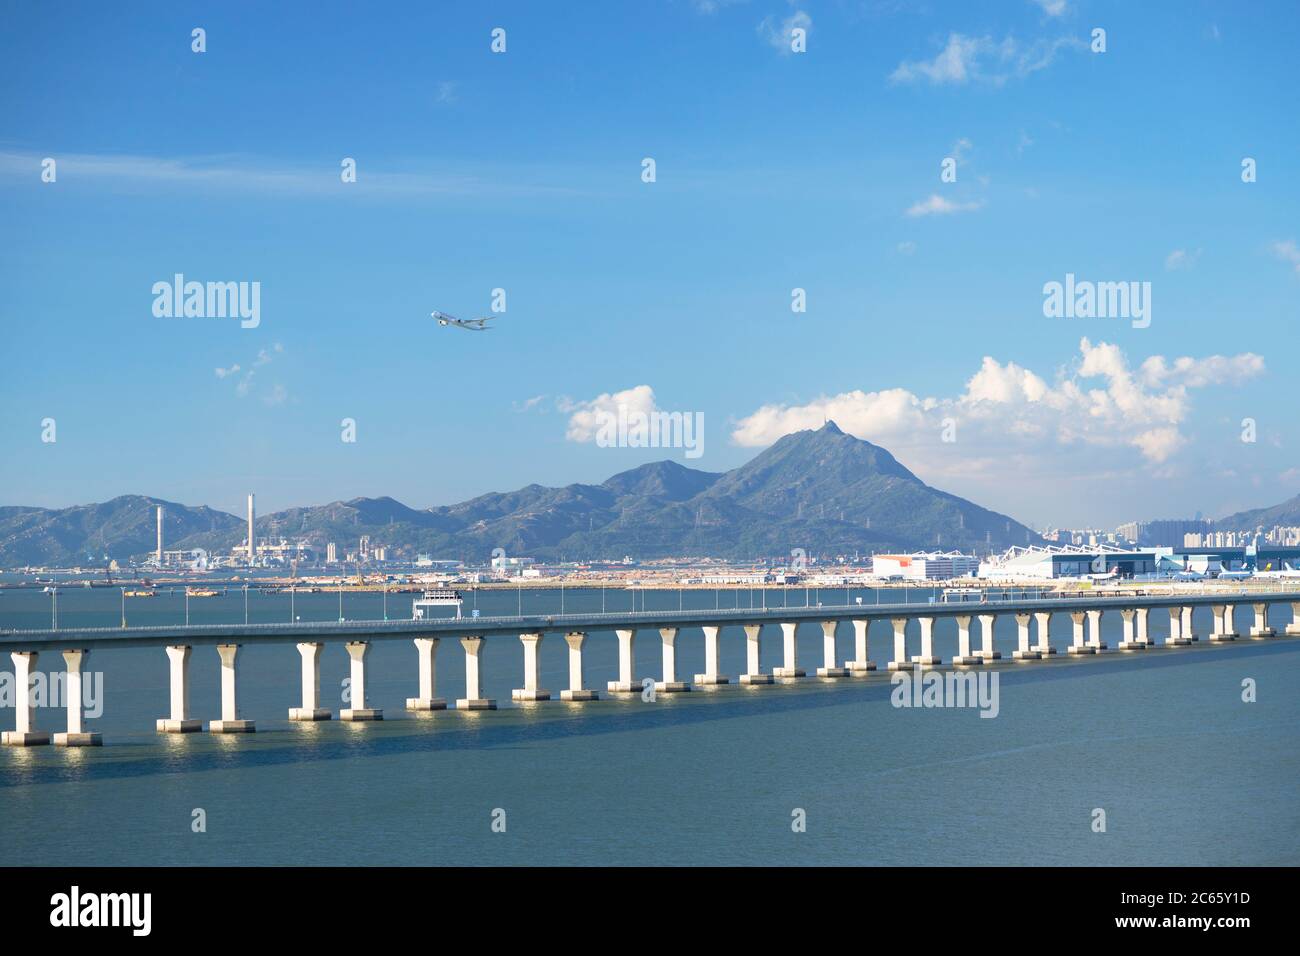 Hong Kong-Zhuhai-Macau bridge and Hong Kong International Airport, Lantau Island, Hong Kong Stock Photo